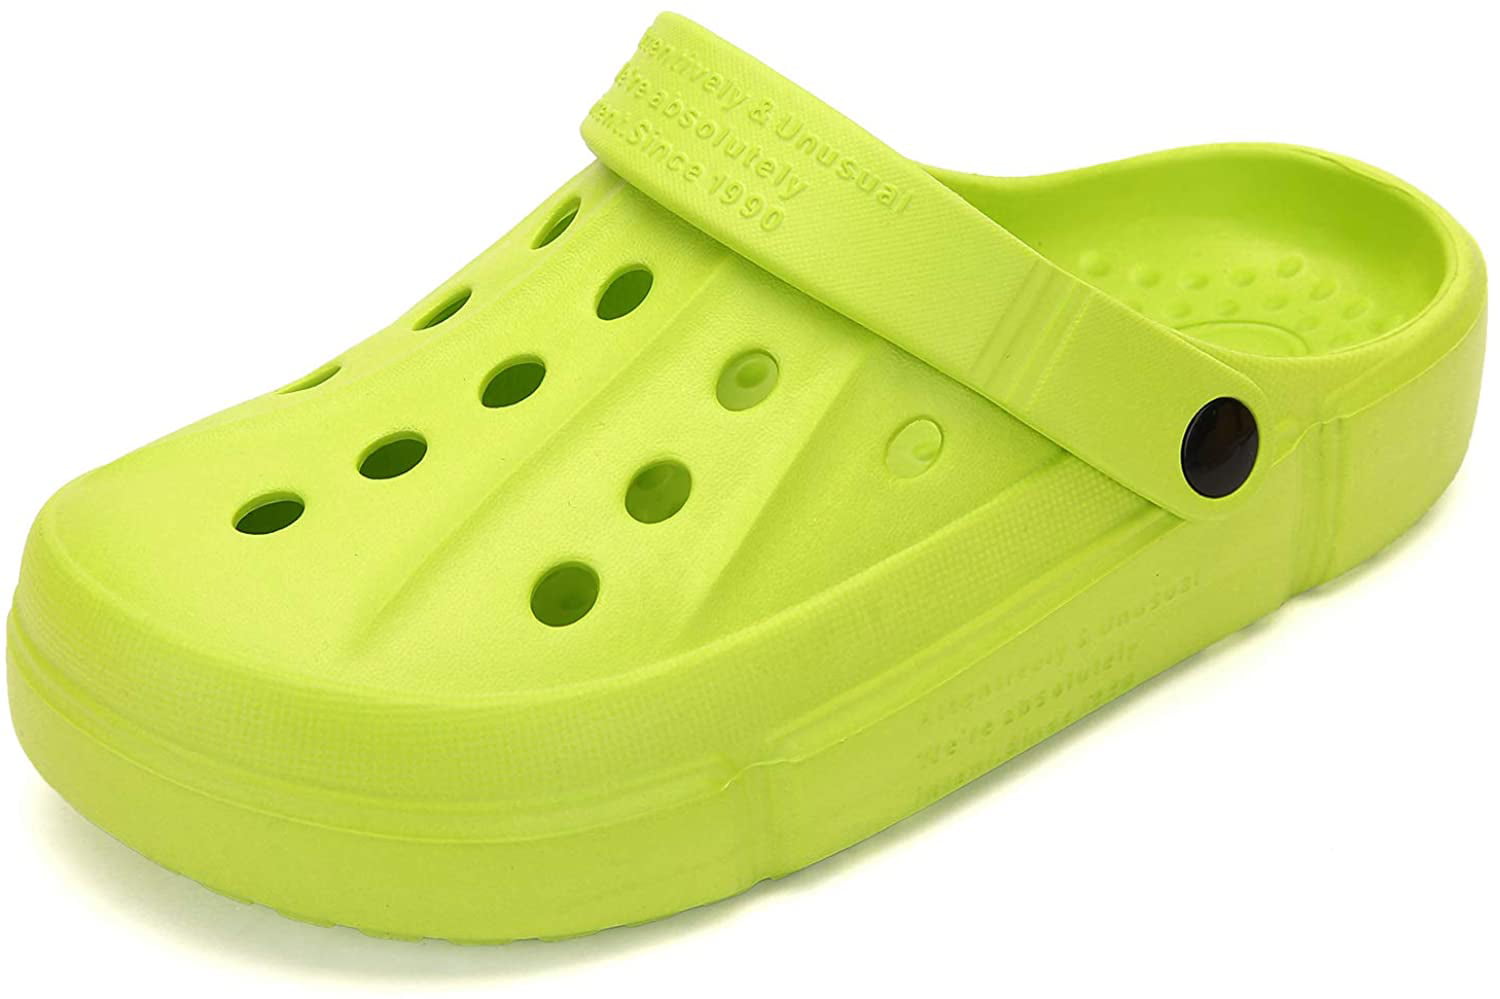 Imagine Age Unisex Garden Clogs Shoes Shower Sandals Slippers